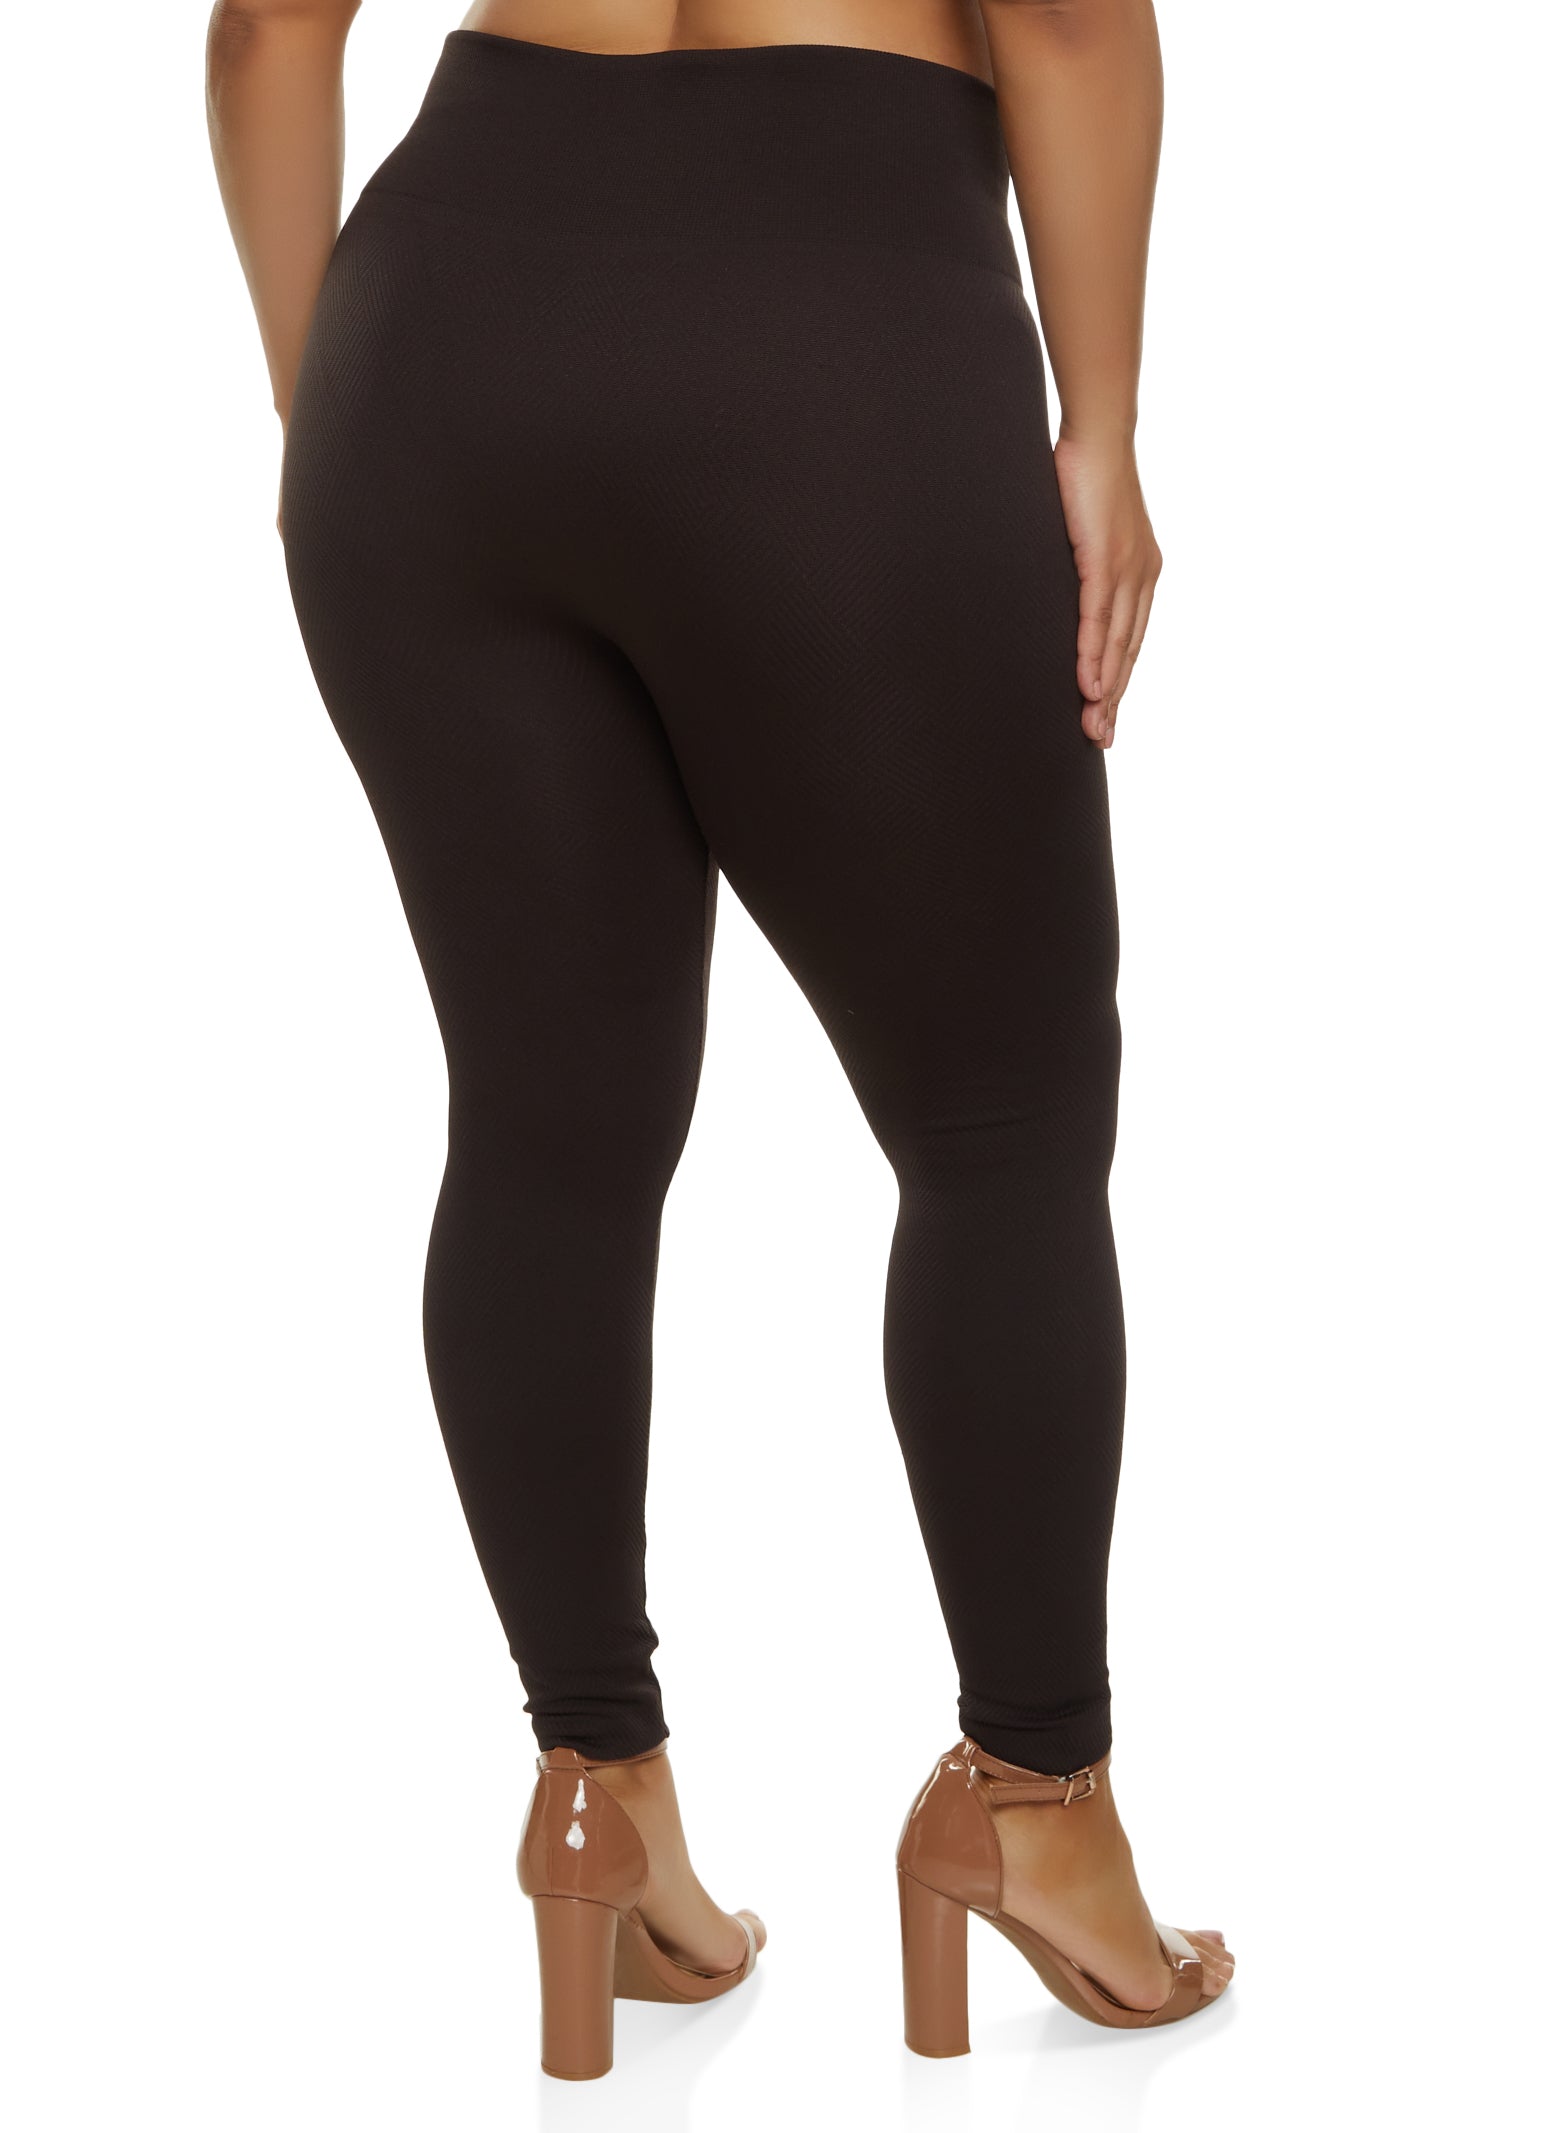 Plus Size Leggings Pants for Women 3X Solid Color Seamless Fleece